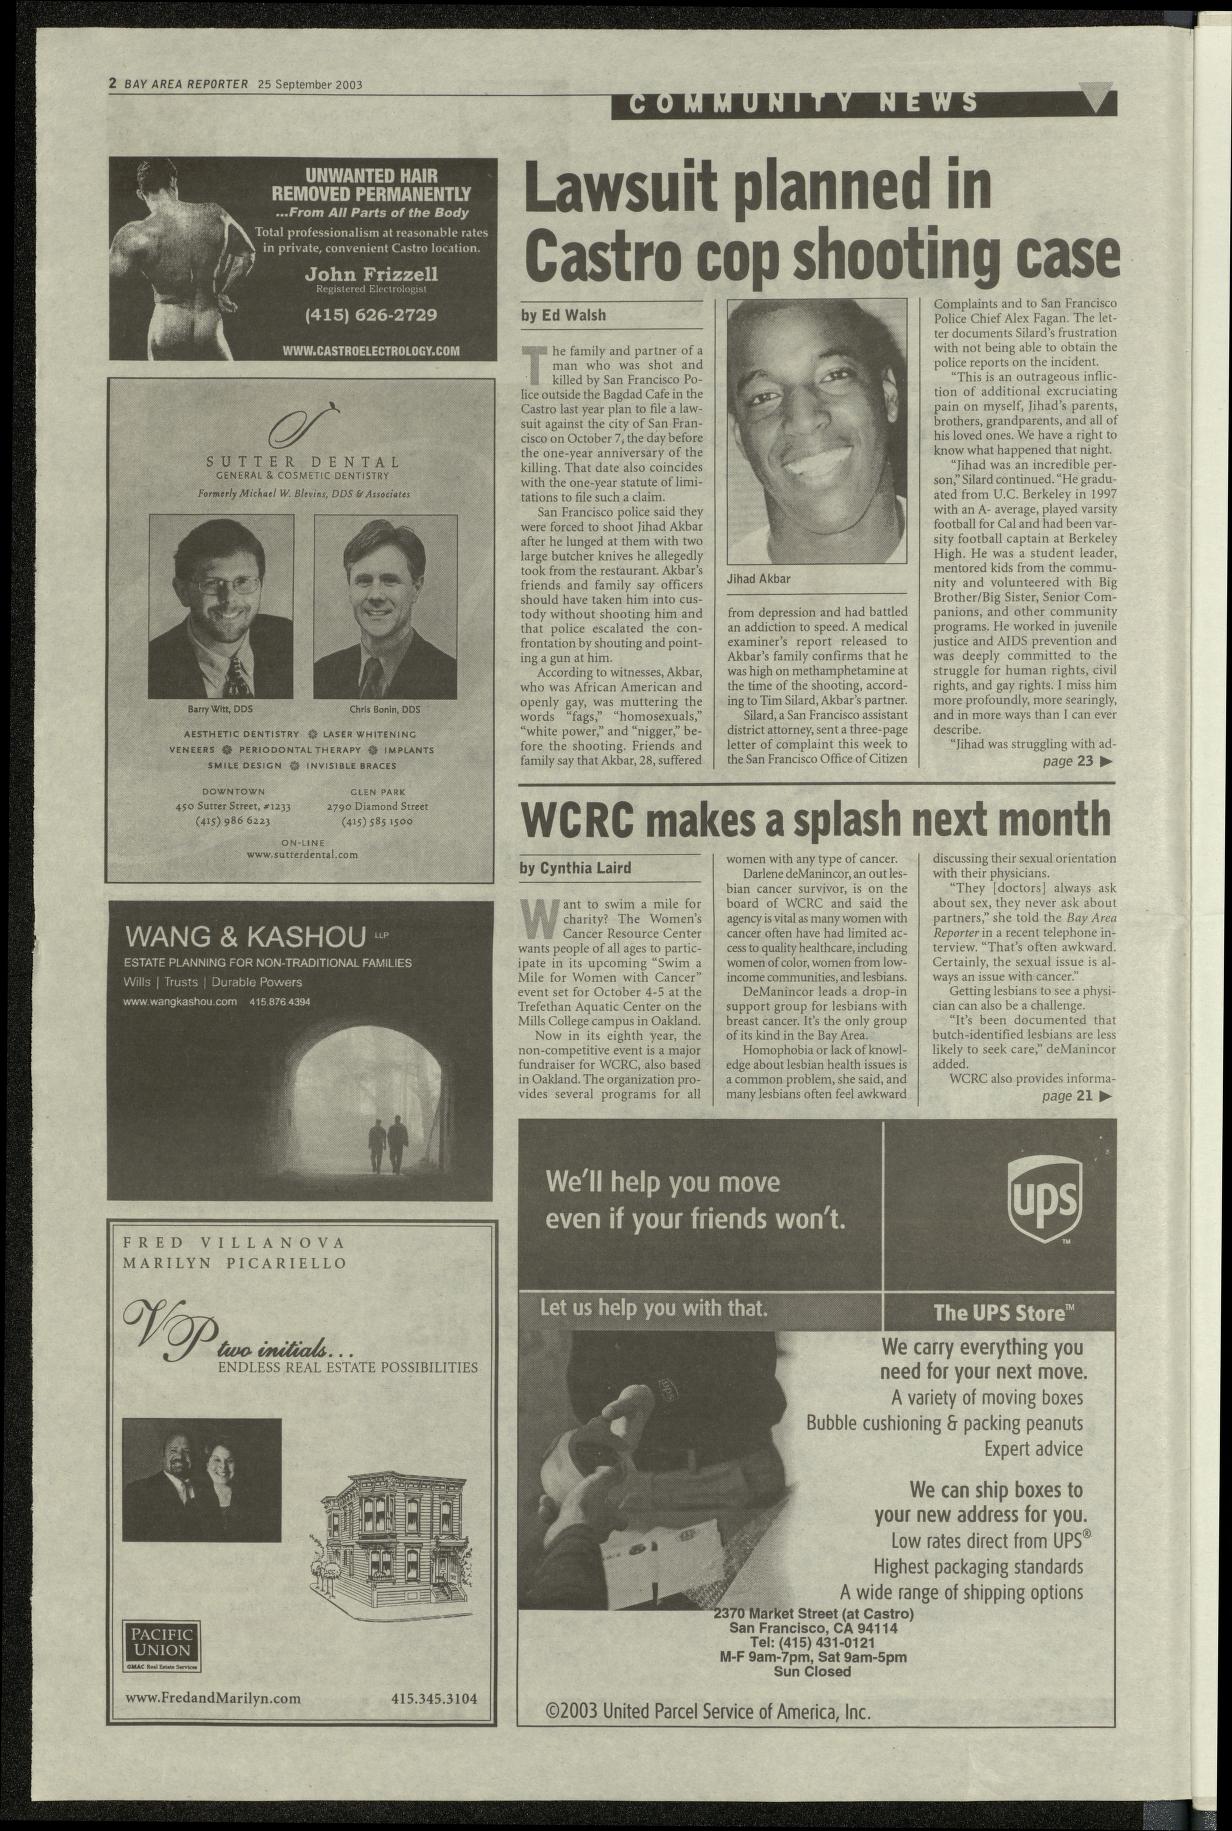 Bay Area Reporter, Volume 33, Number 39, 25 September 2003 : Free 